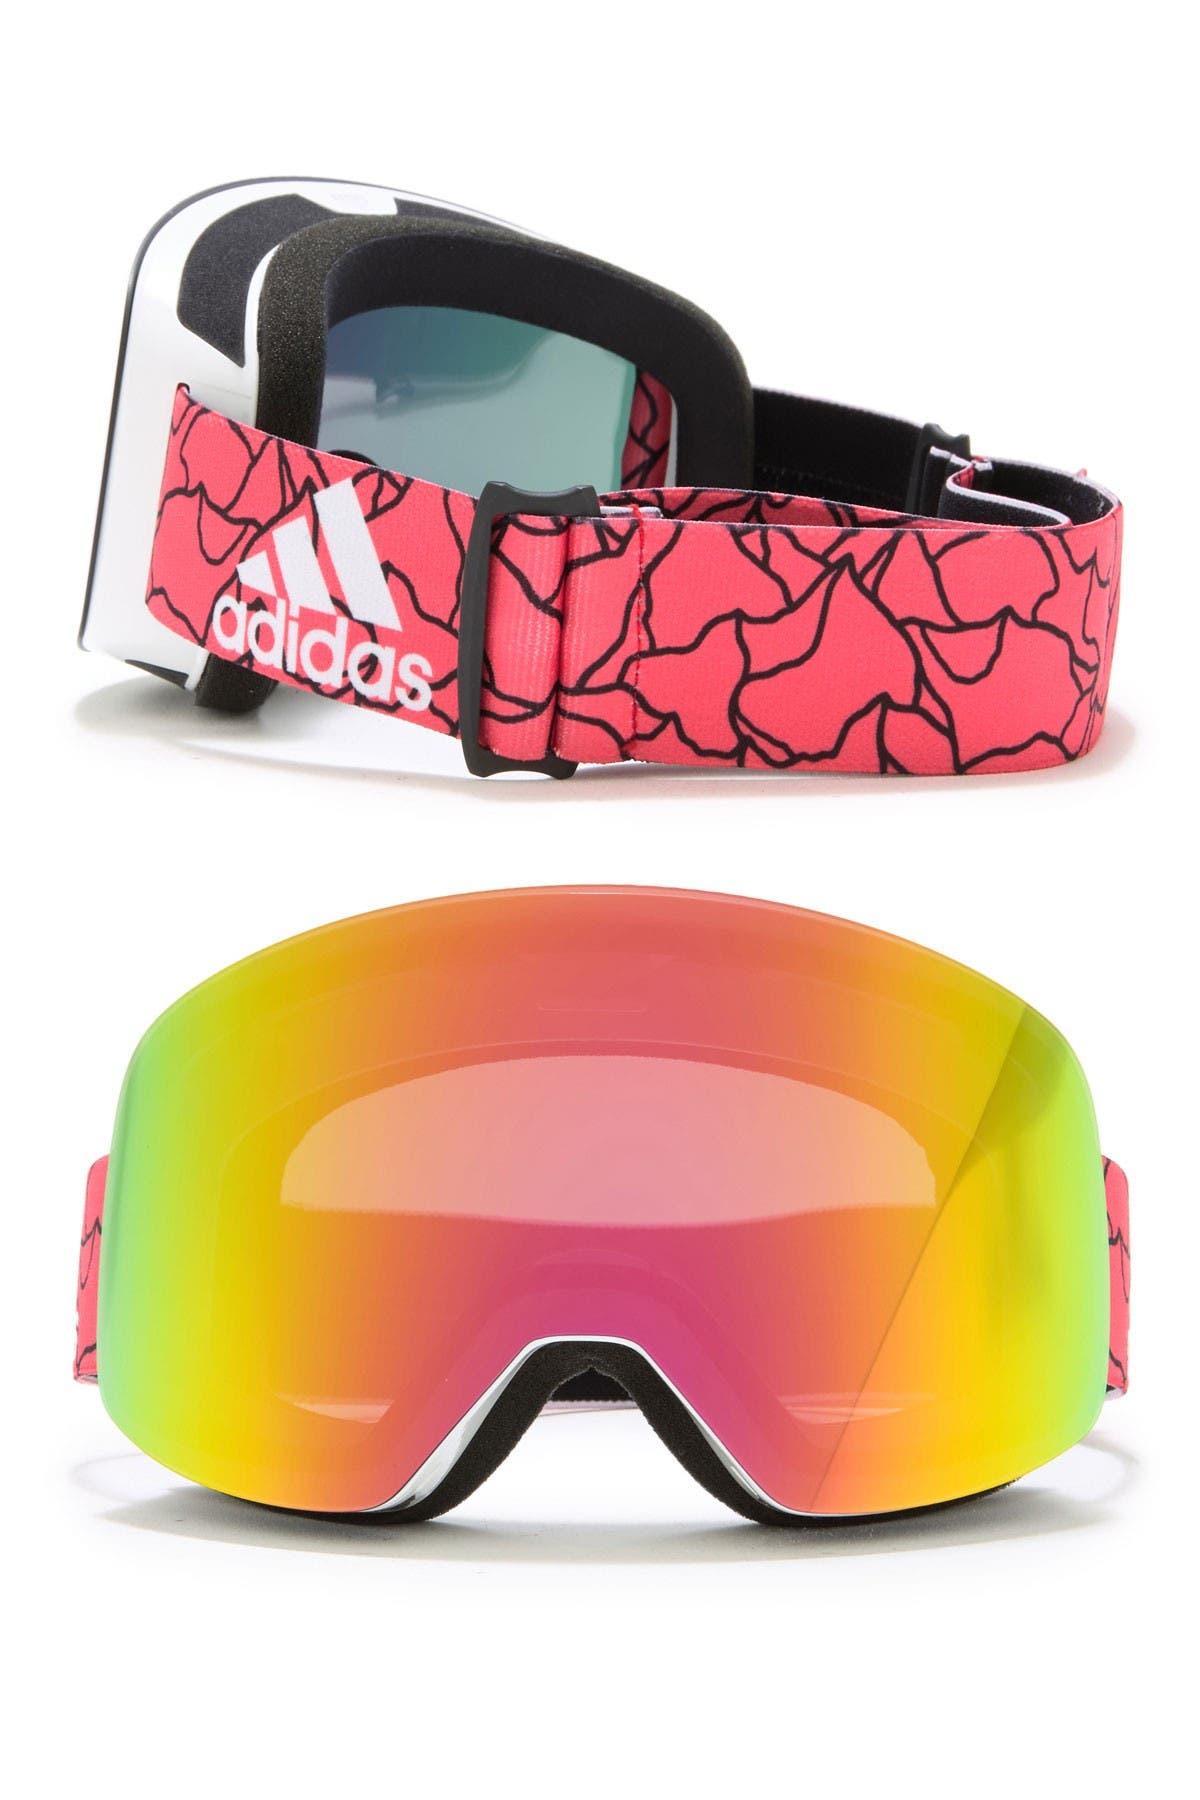 adidas ski goggles